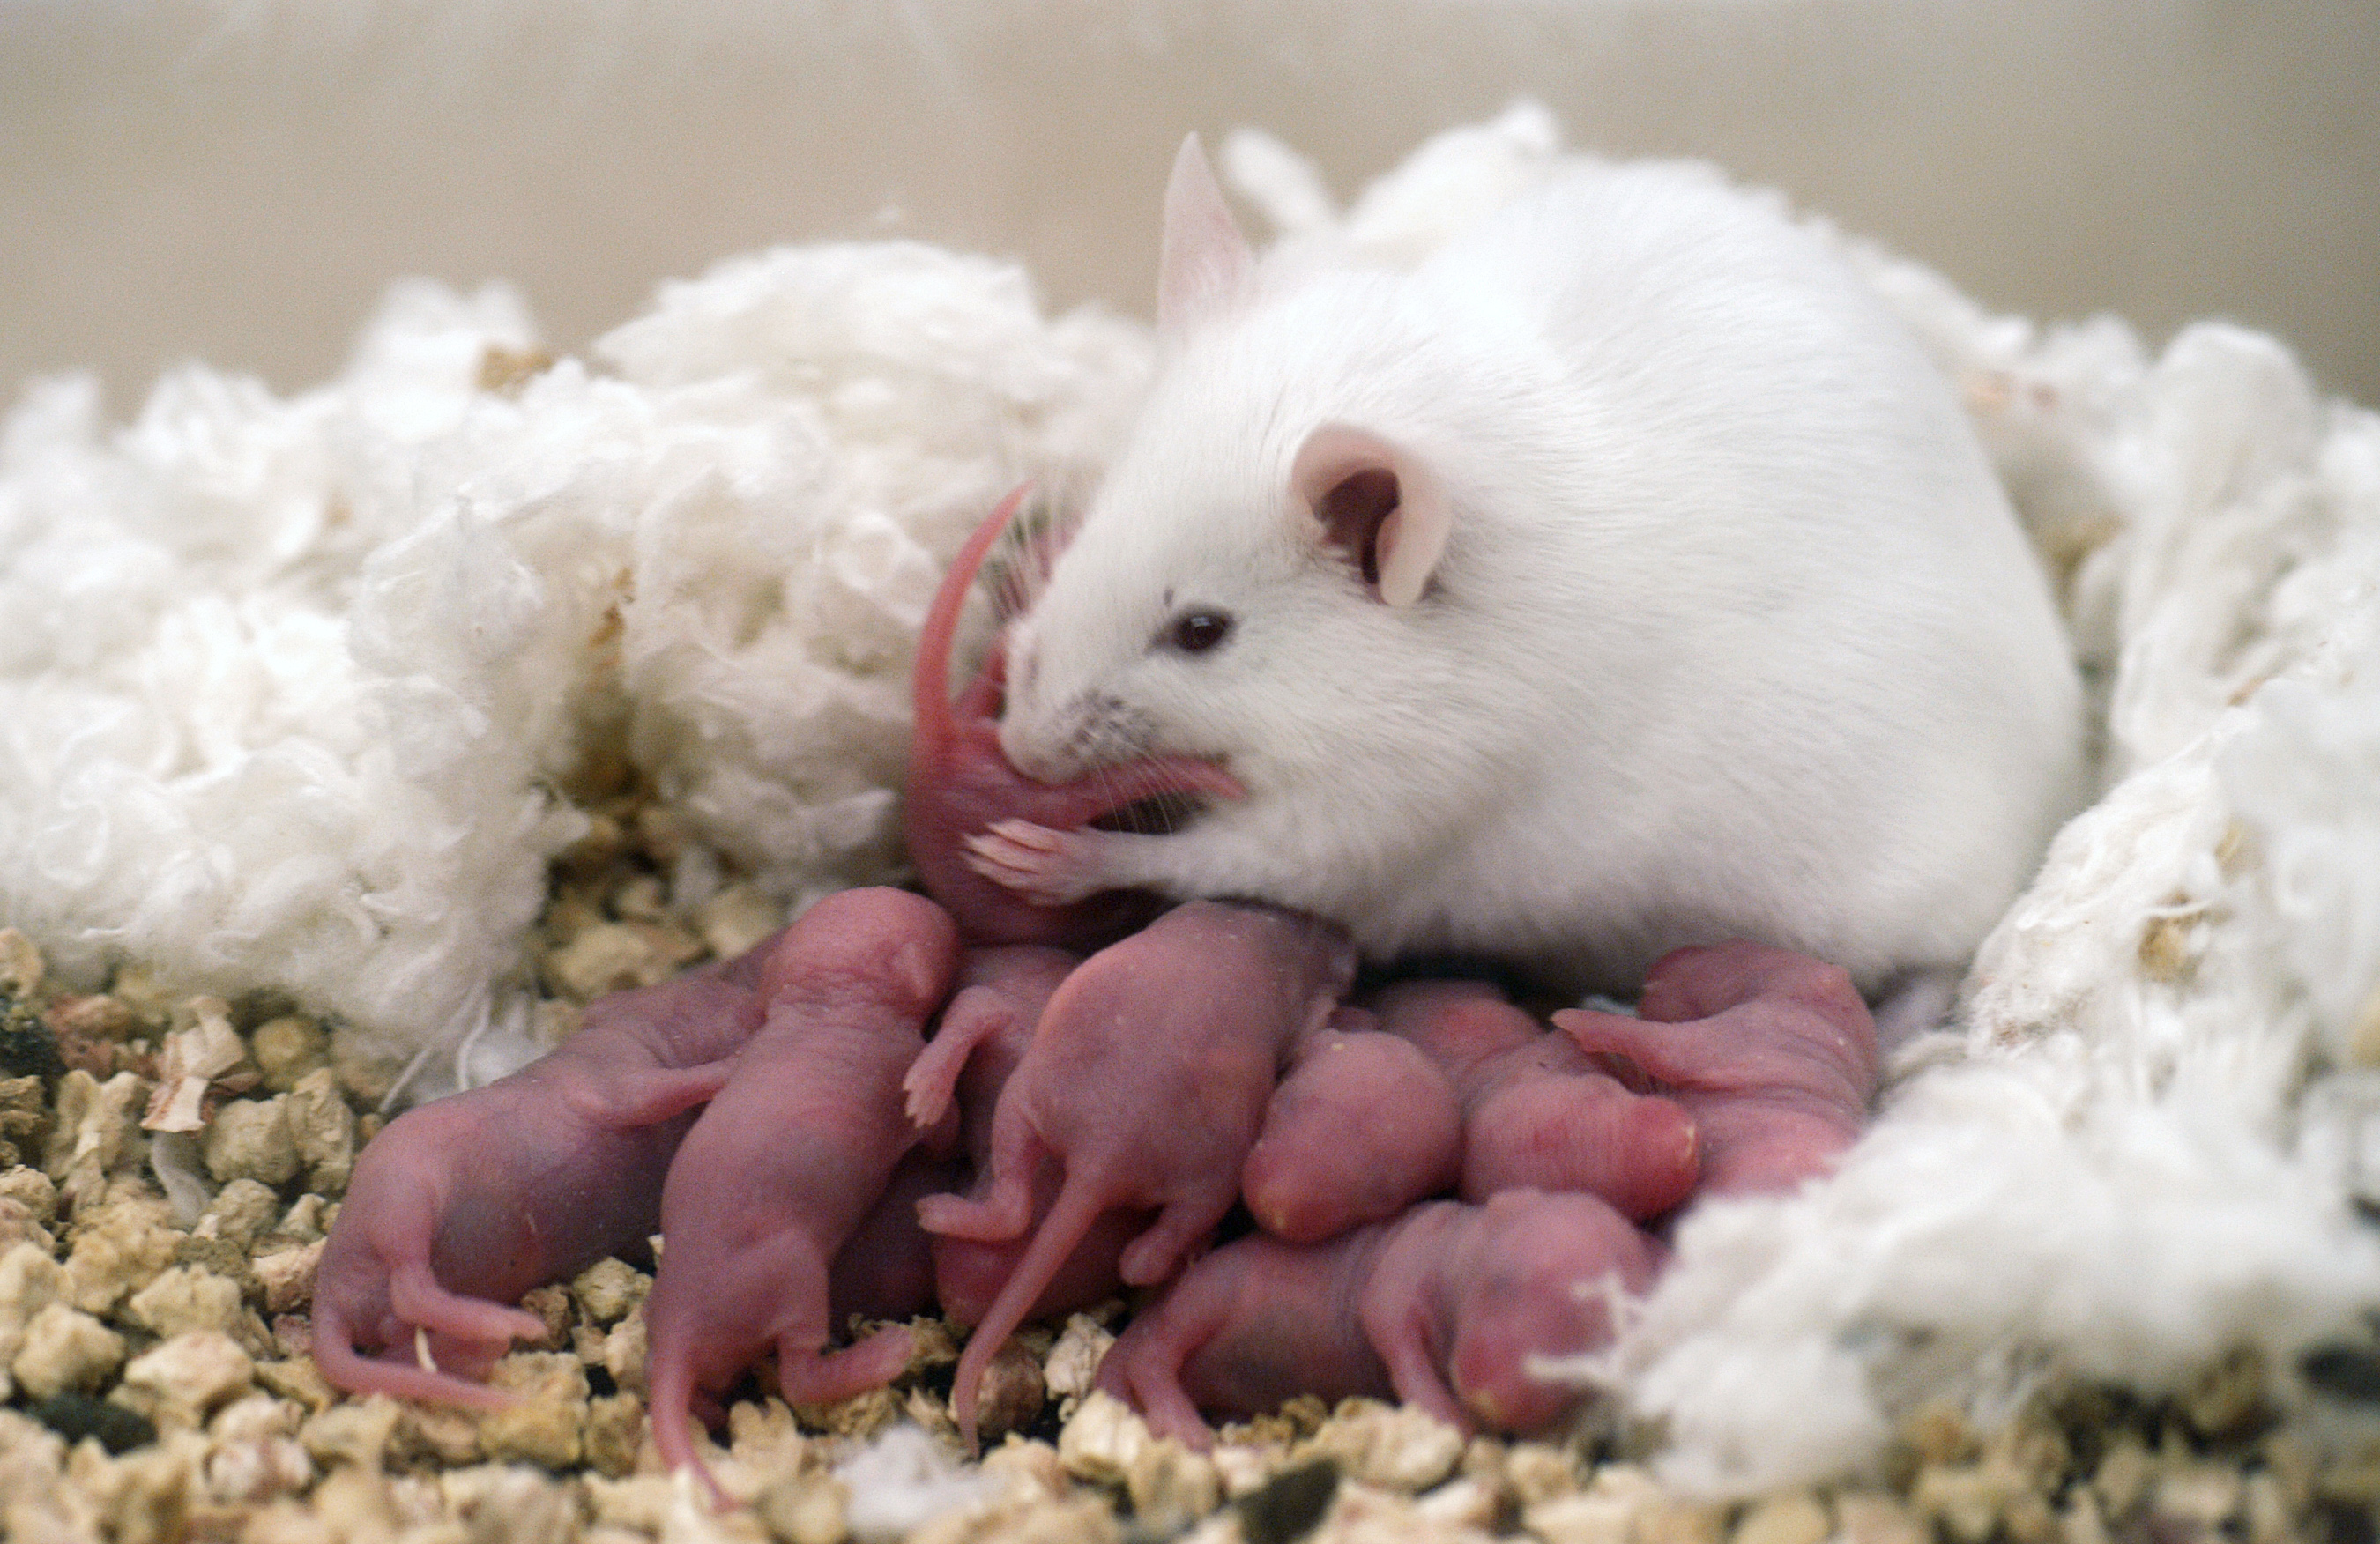 How long do mice feed their babies?